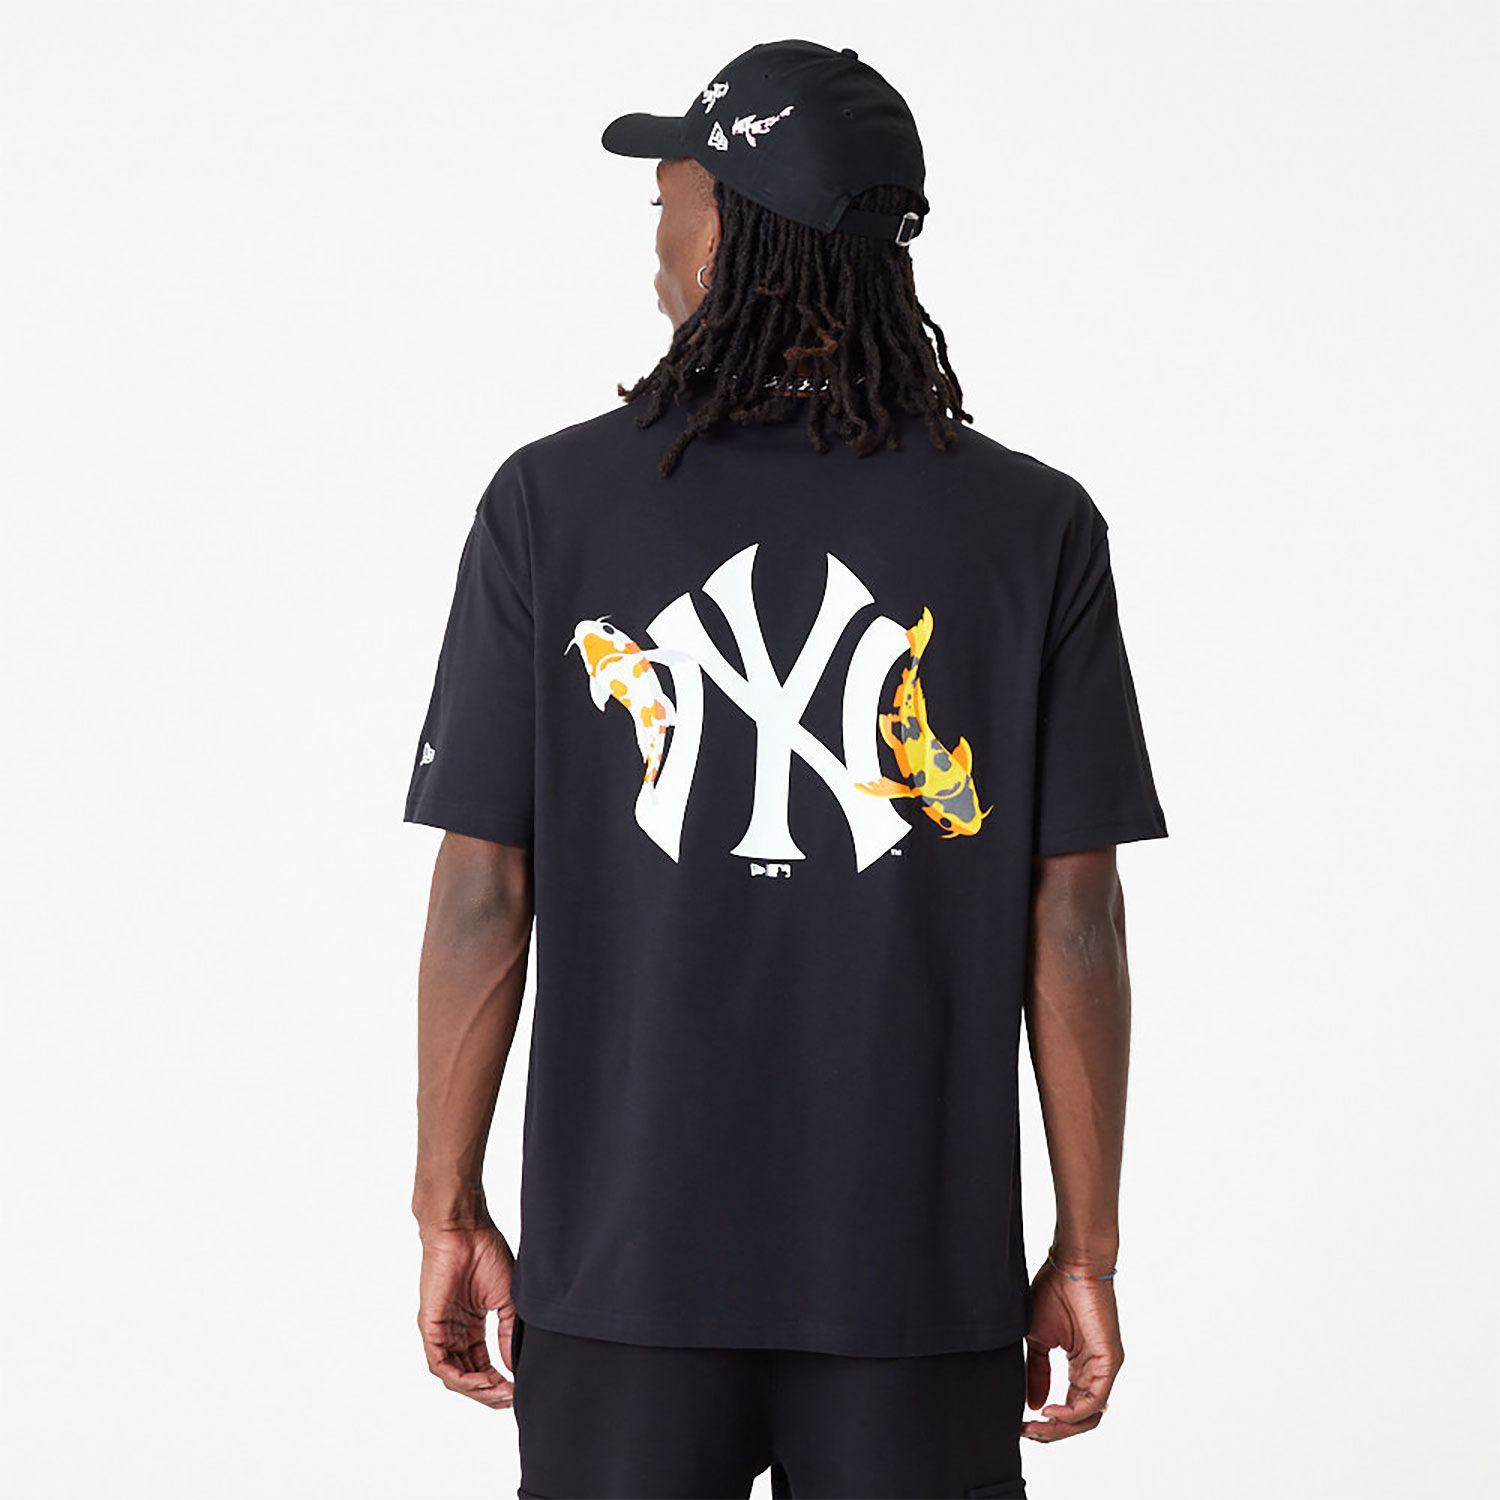 New York Yankees MLB Majestic Threads Men's XL Black Graphic T